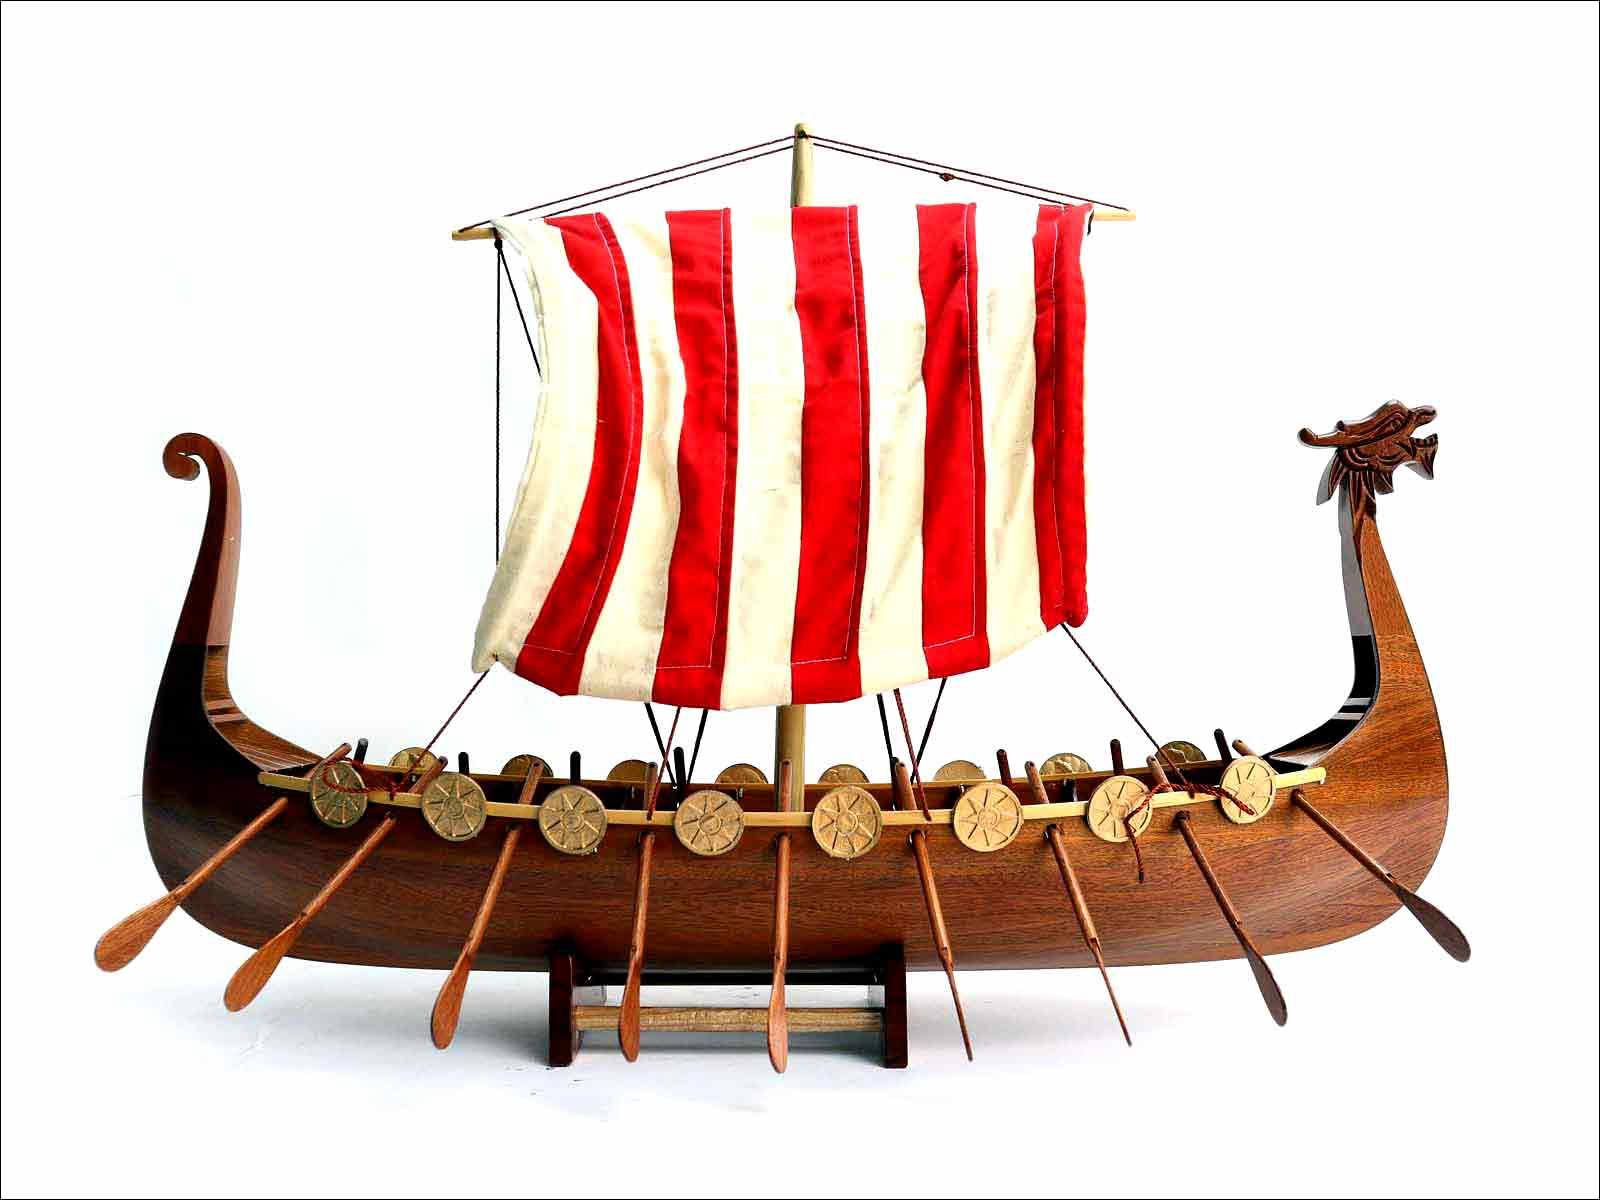 Drakkar Viking longship model for sale uk